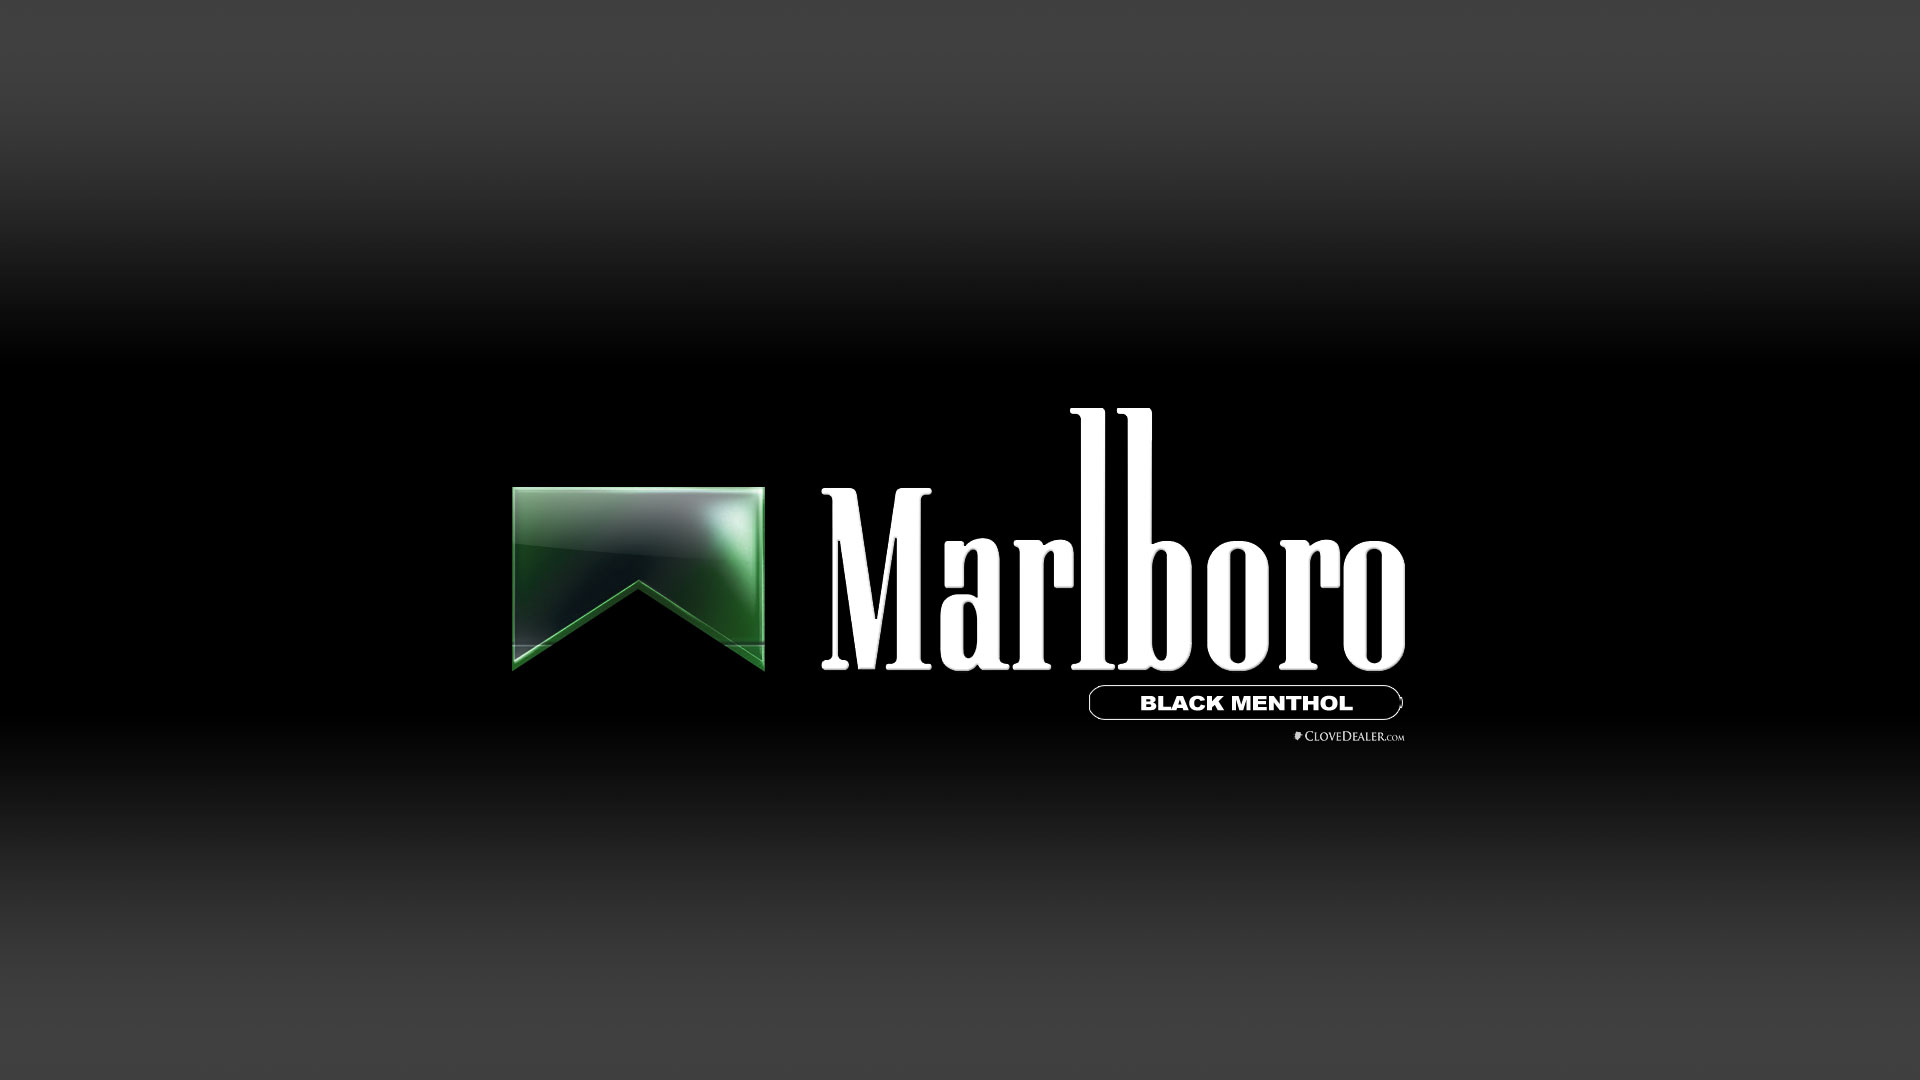 Marlboro Black Menthol Cigarettes Wallpaper HD by cigaretteswallpaper 1920x1080